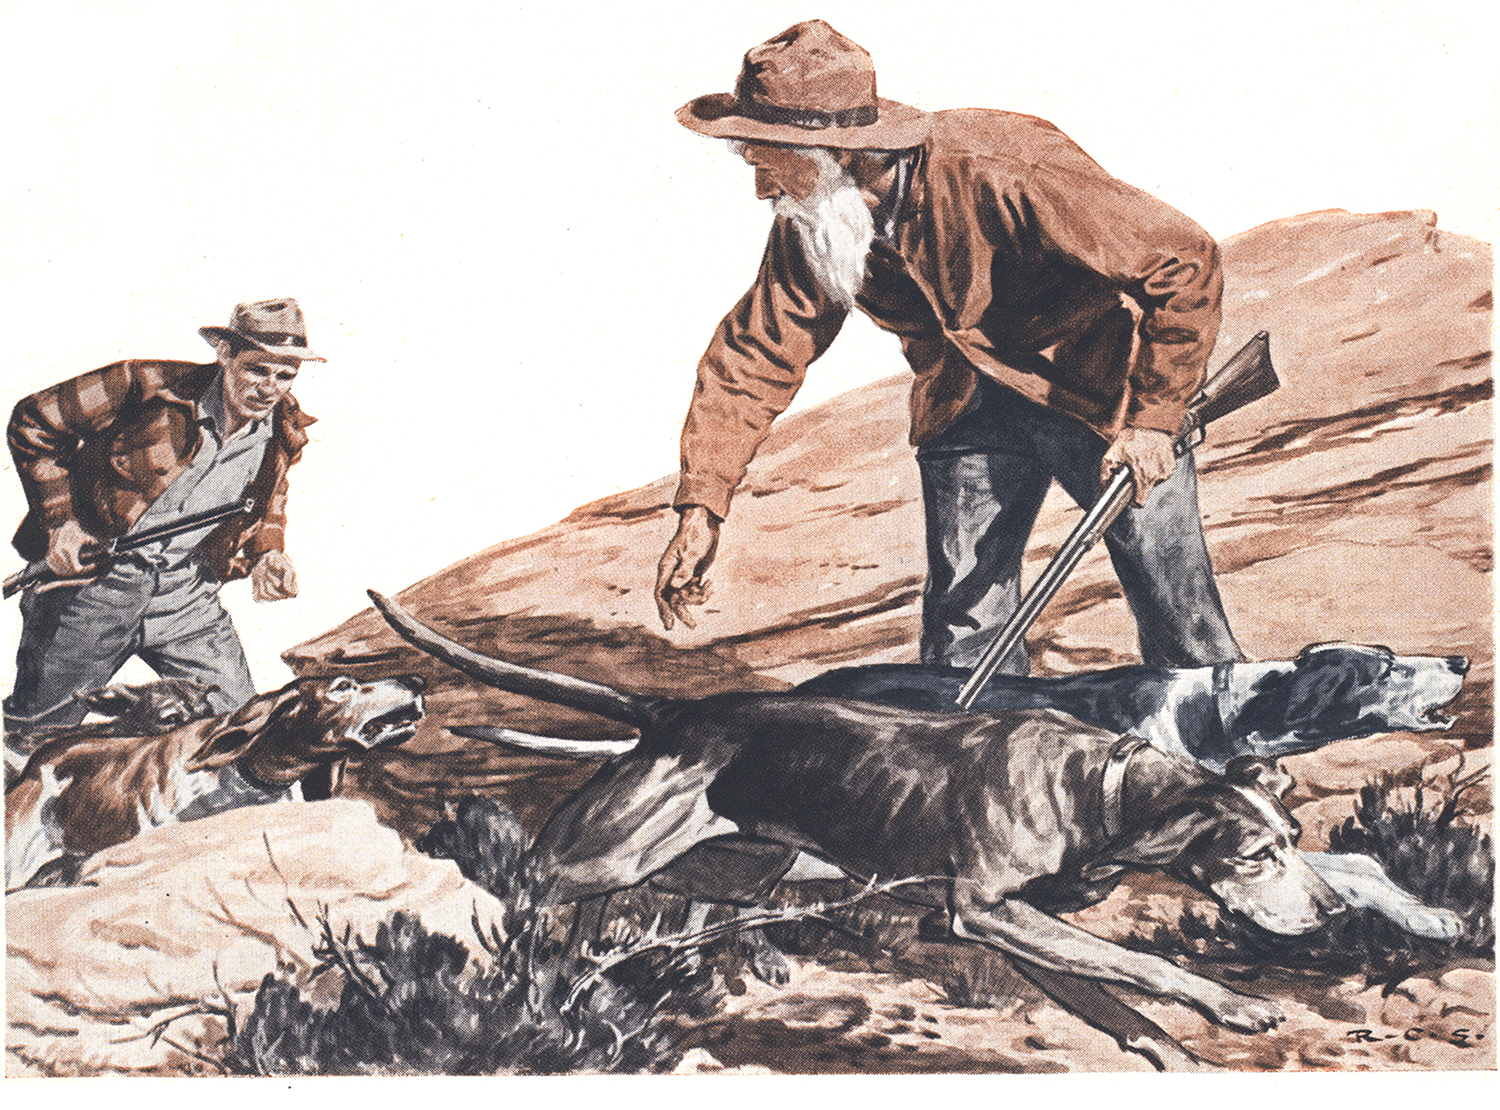 old magazine illustration of hunter directing hounds in desert environment